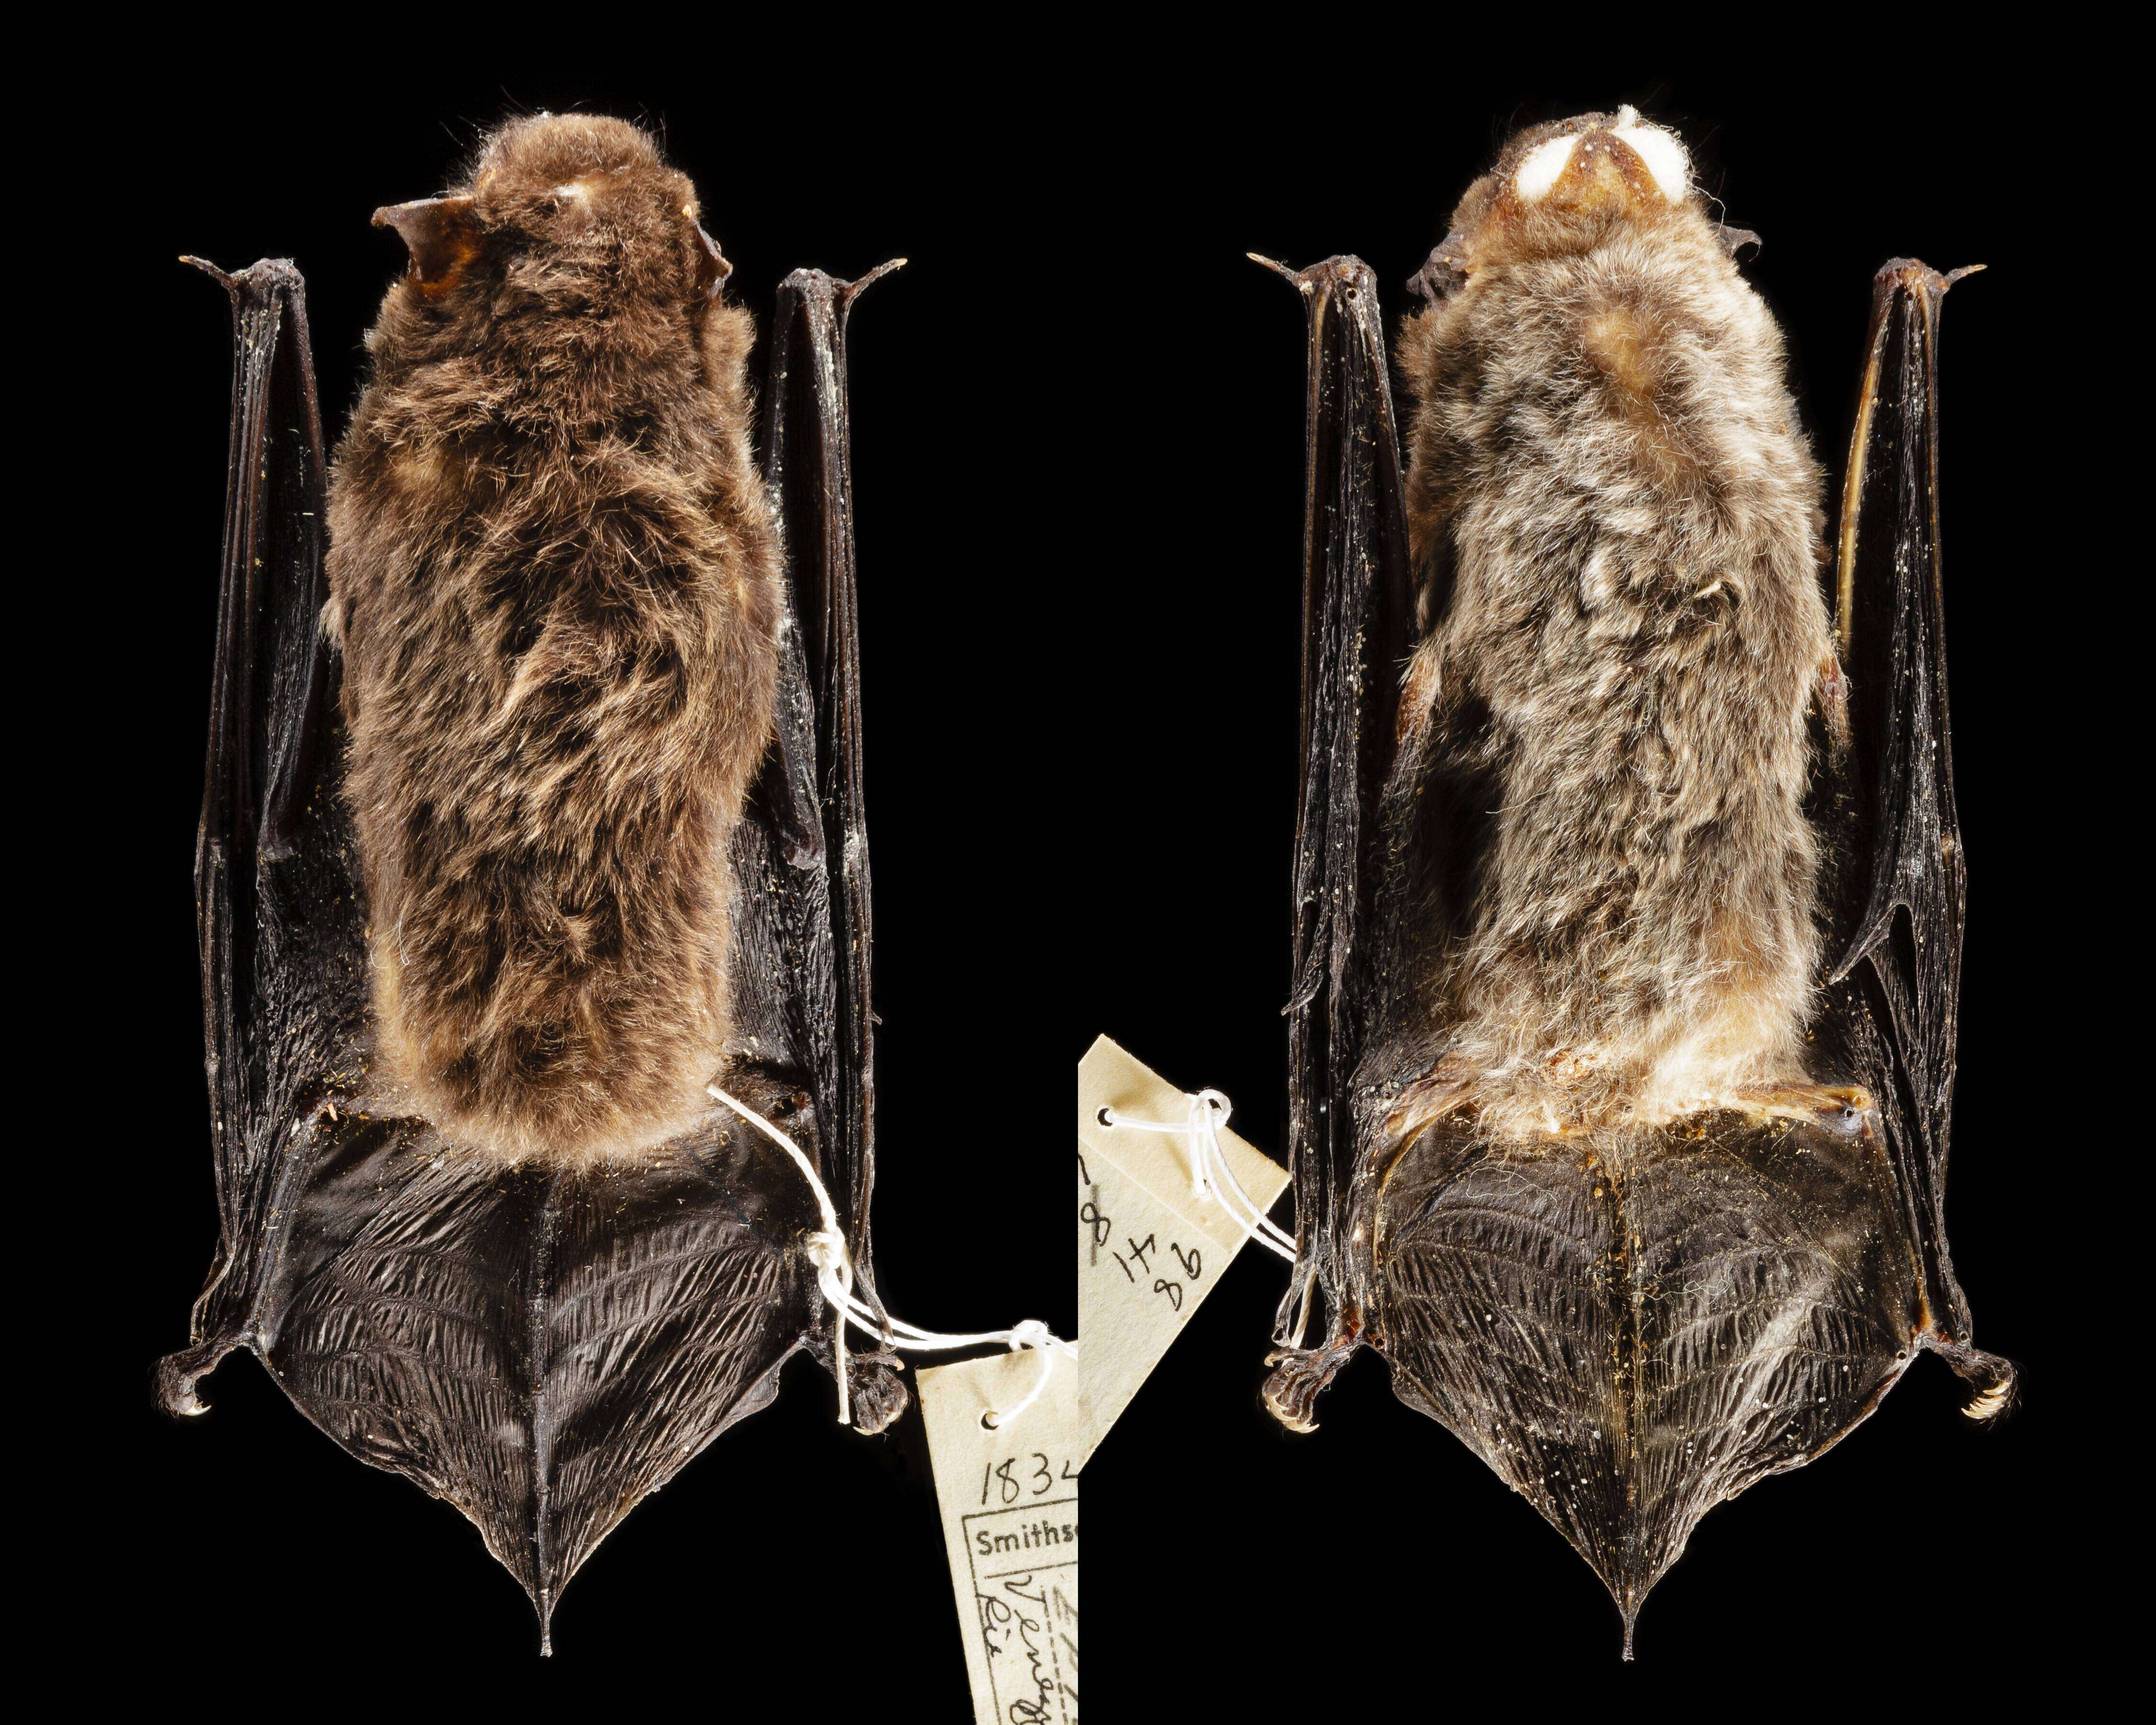 Image of Brazilian brown bat